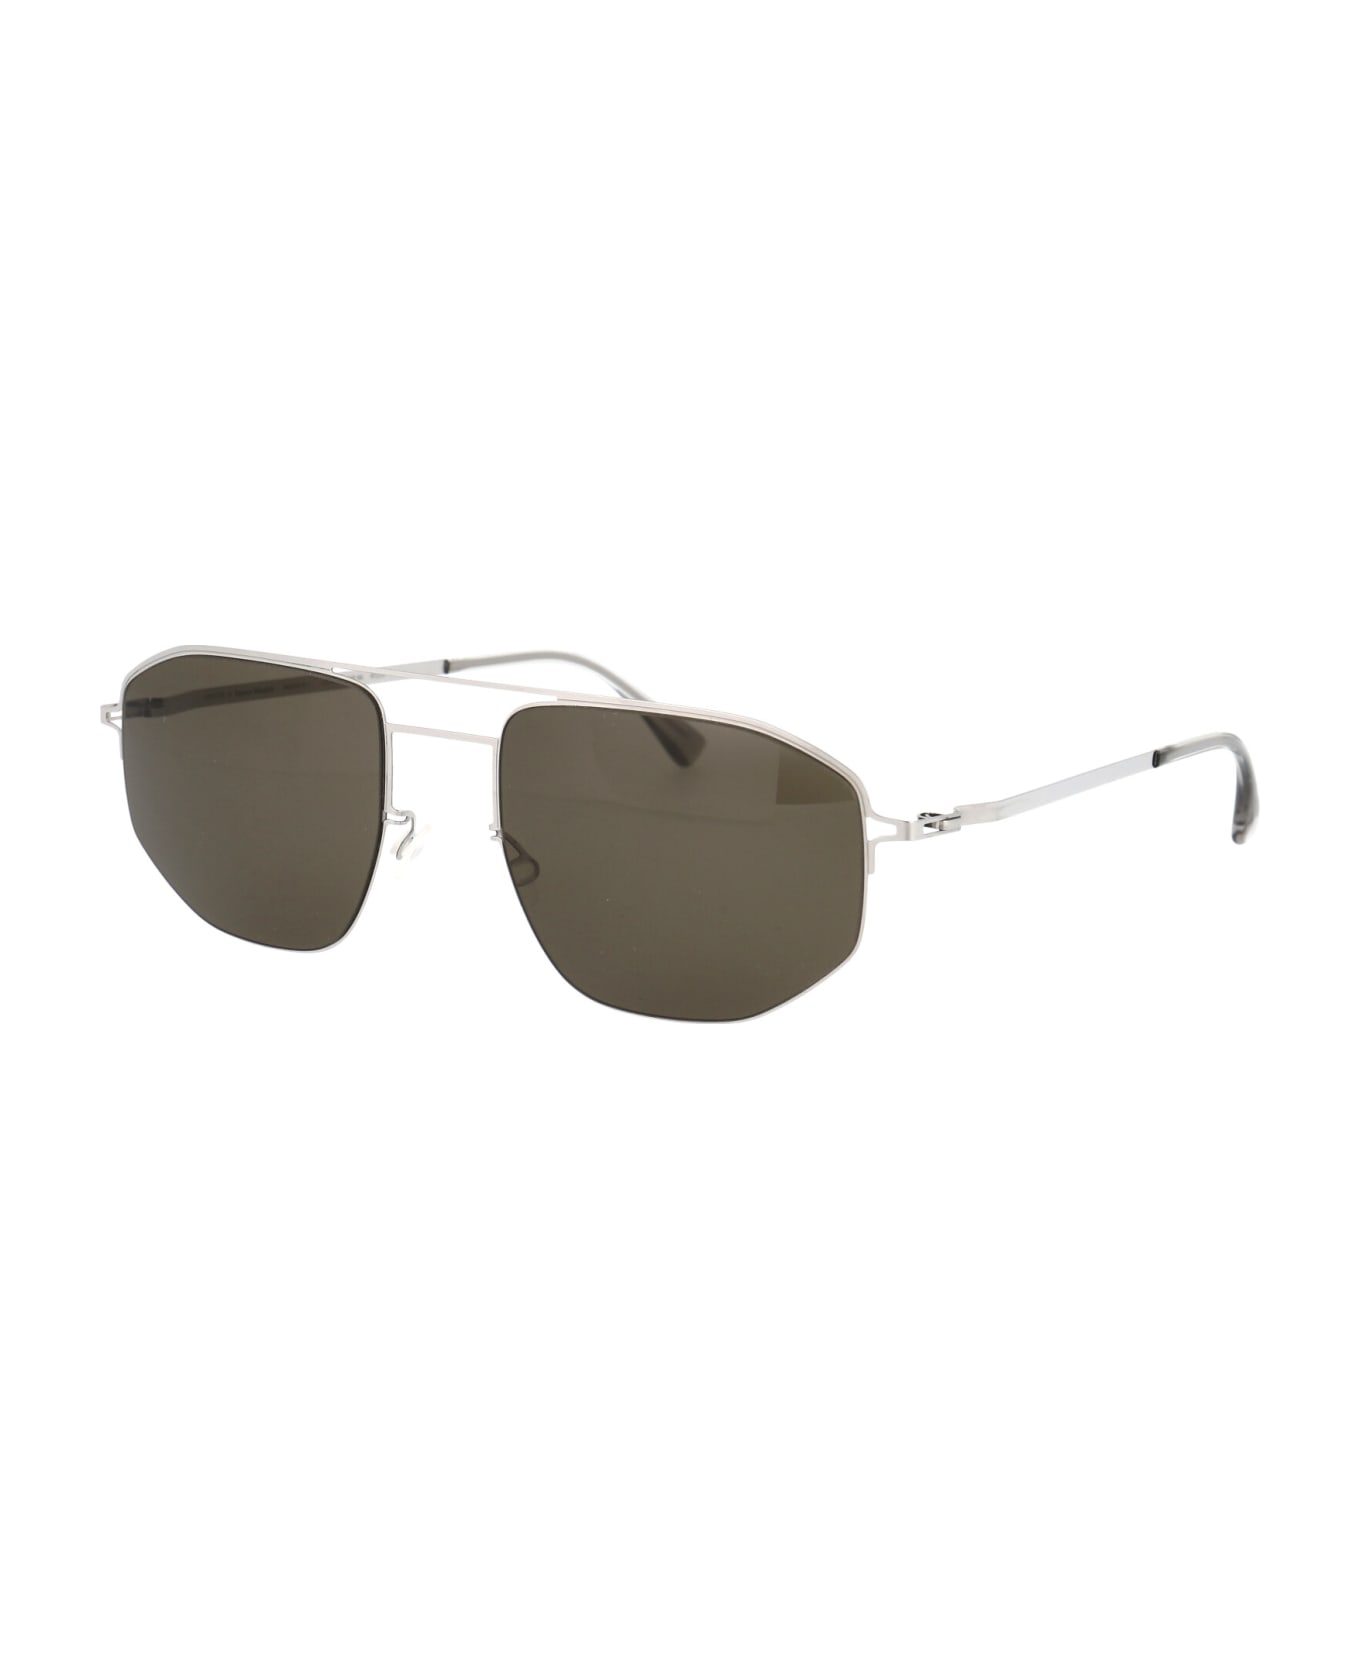 Mykita Mmcraft017 Sunglasses - 051 Shinysilver Rawgreen Solid